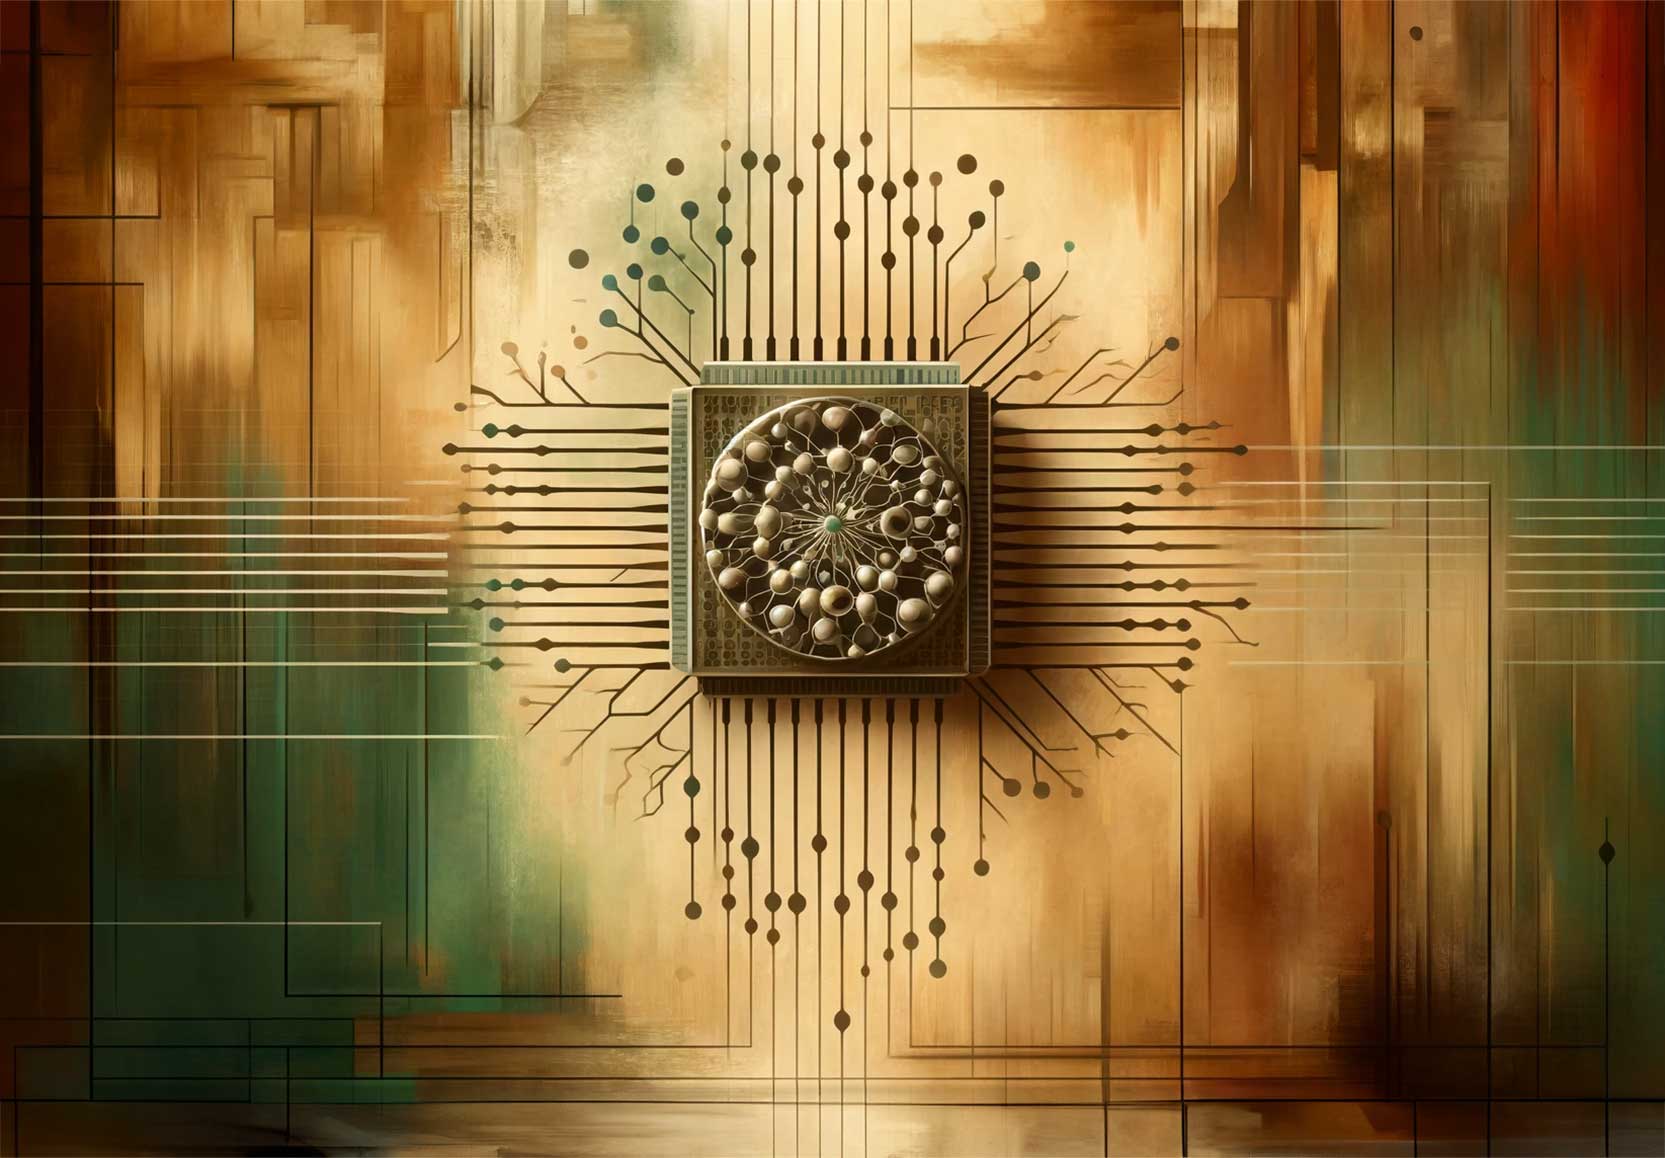 A stylized image of a processor